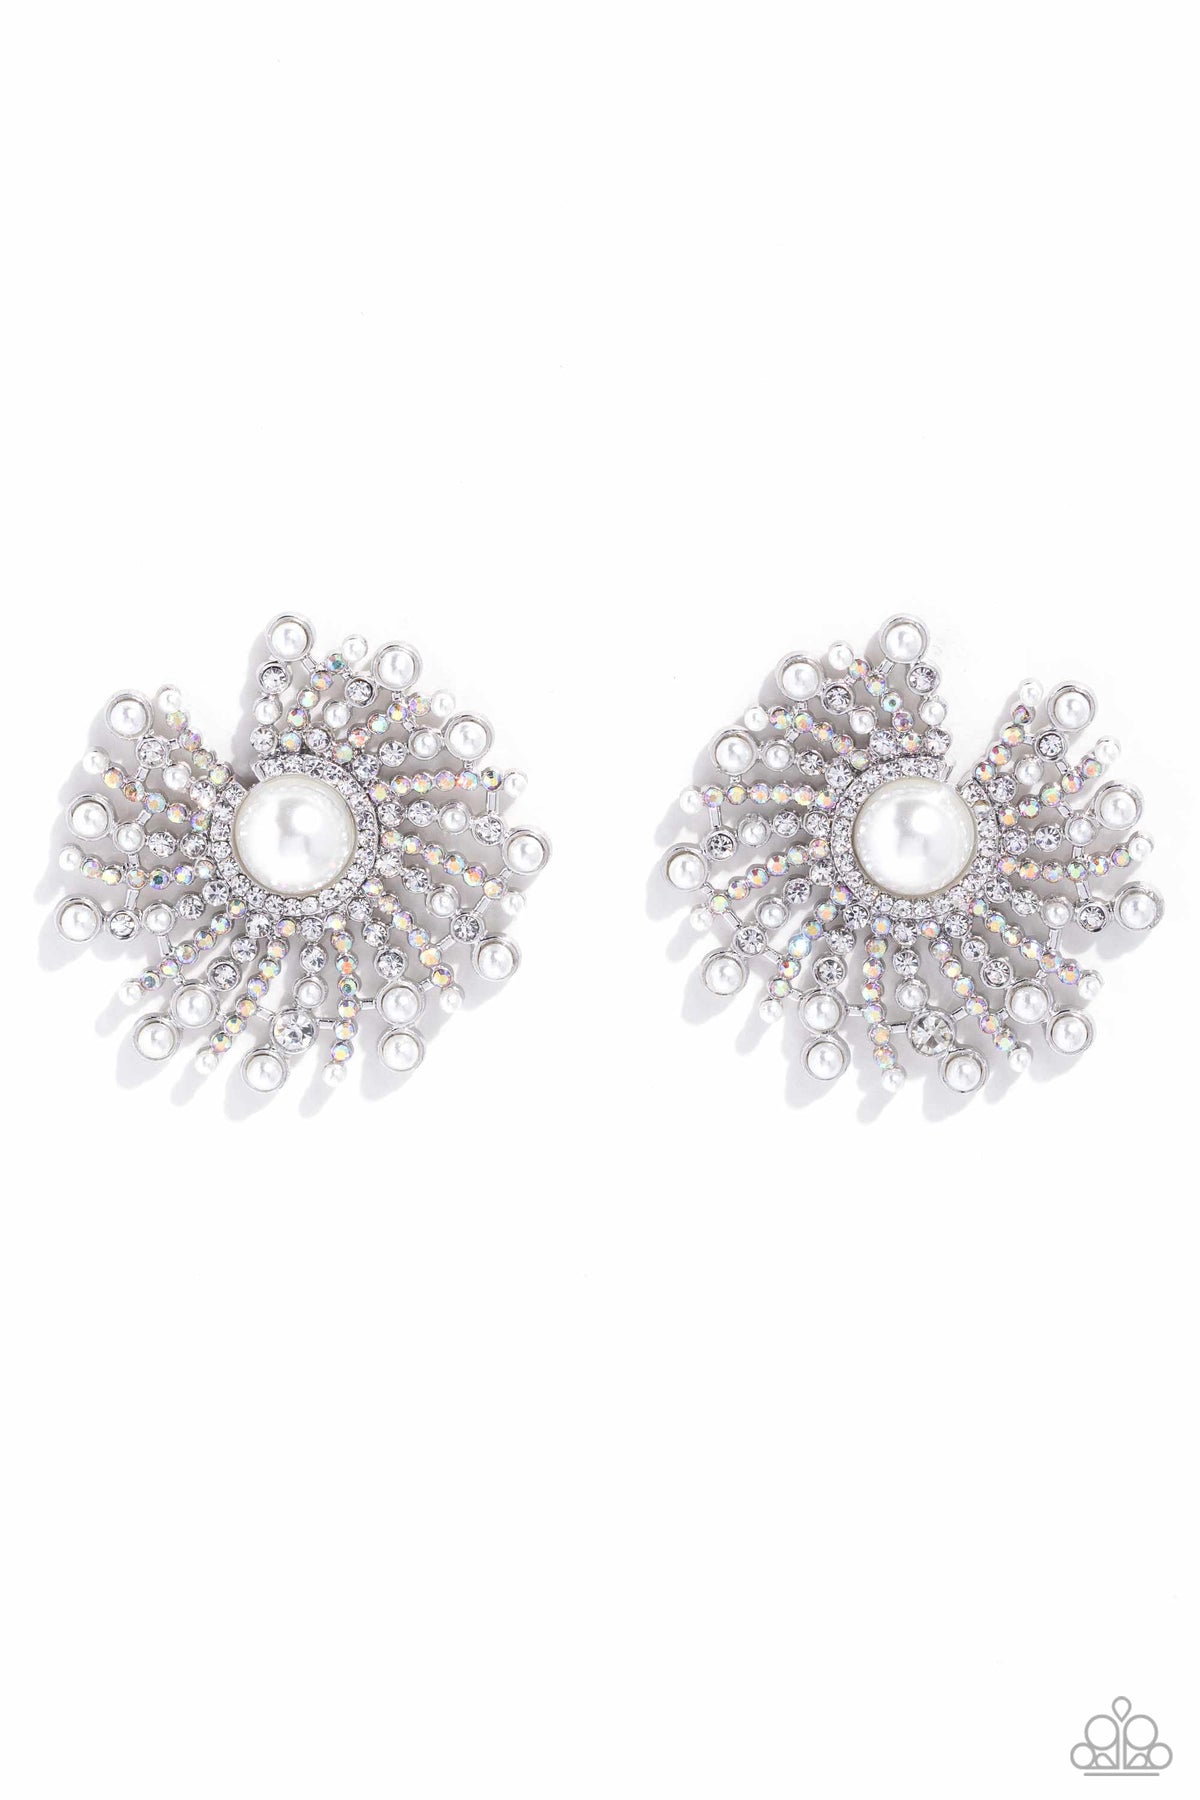 Fancy Fireworks White Pearl &amp; Rhinestone Earrings - Paparazzi Accessories- lightbox - CarasShop.com - $5 Jewelry by Cara Jewels